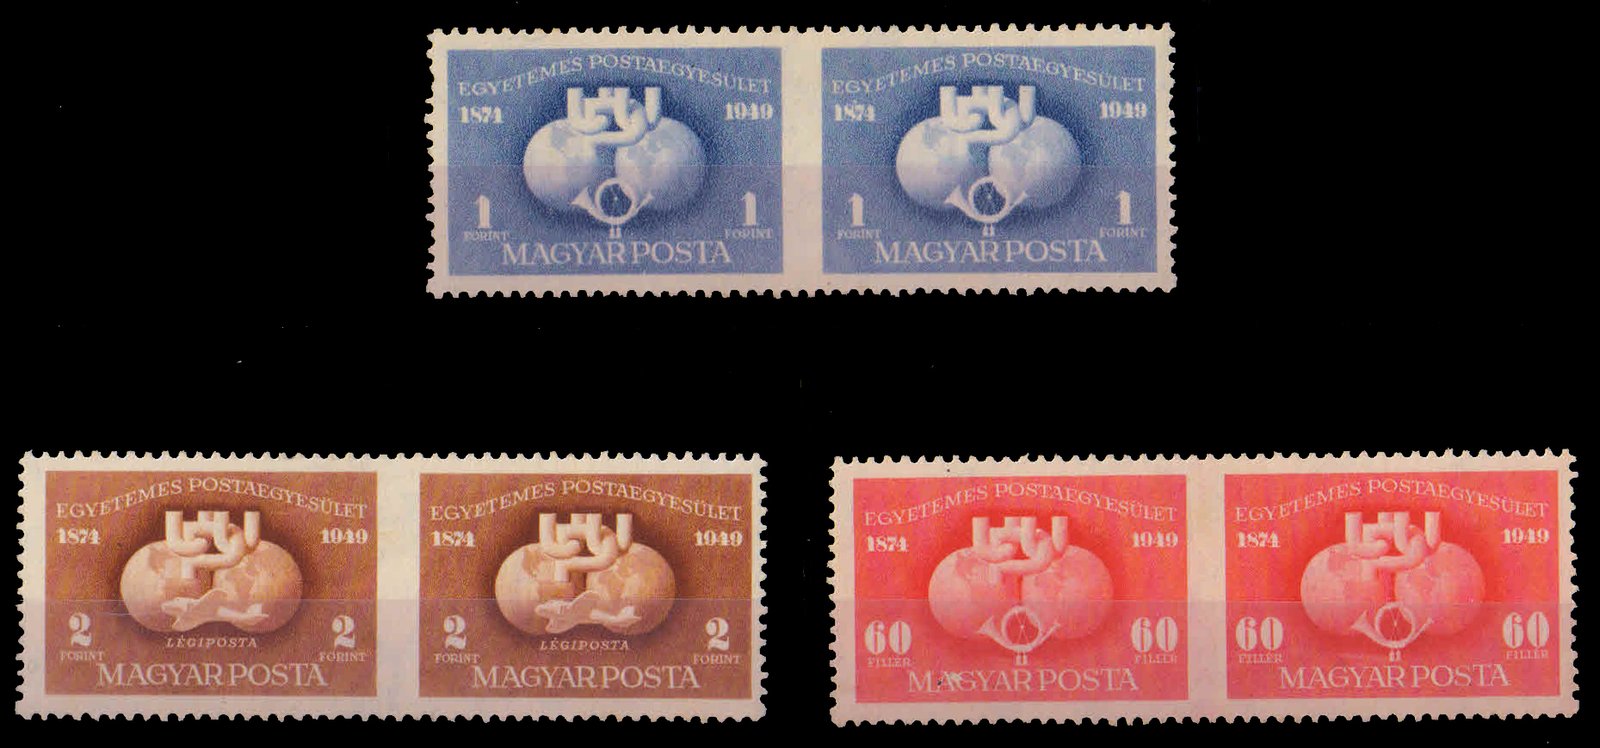 HUNGARY 1949-U.P.U., Imperf between Horizontal Pairs, Comp. set of 3, Mint Lightly Hinged, Rare, S.G. 1069-1071